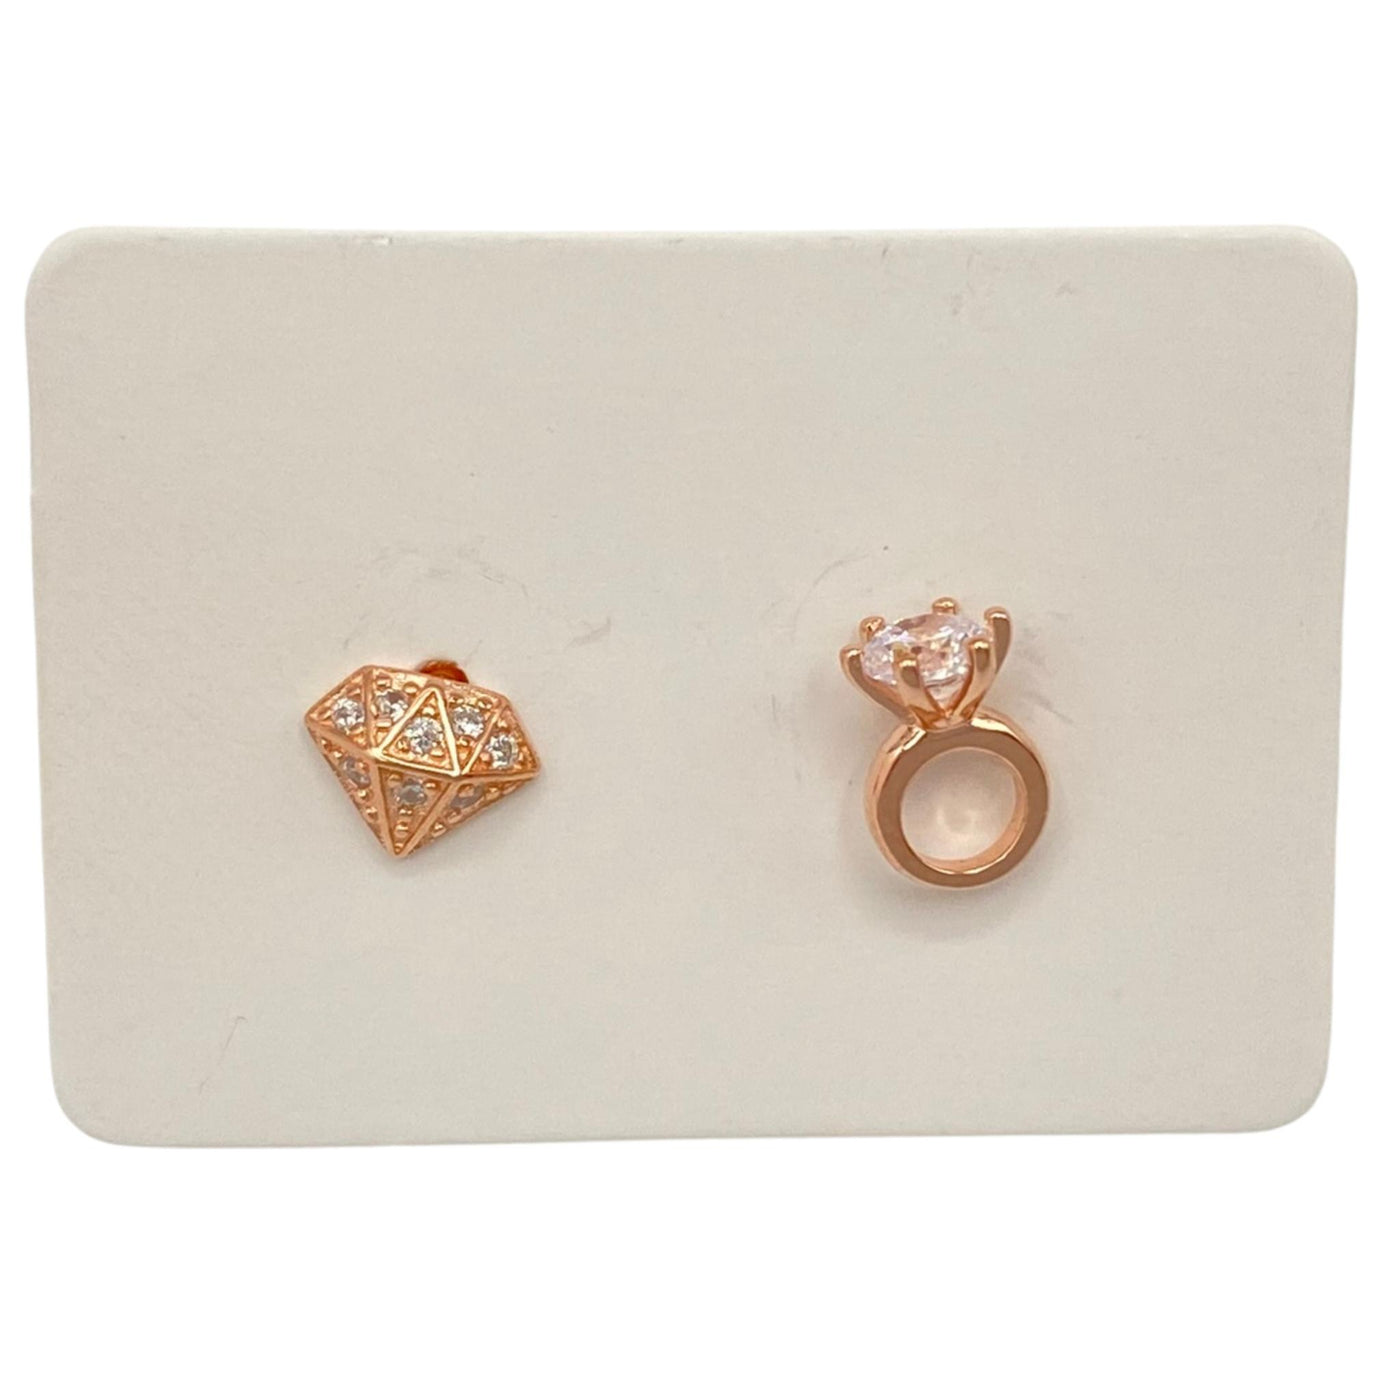 Pack of 5 silver ring & diamond earrings